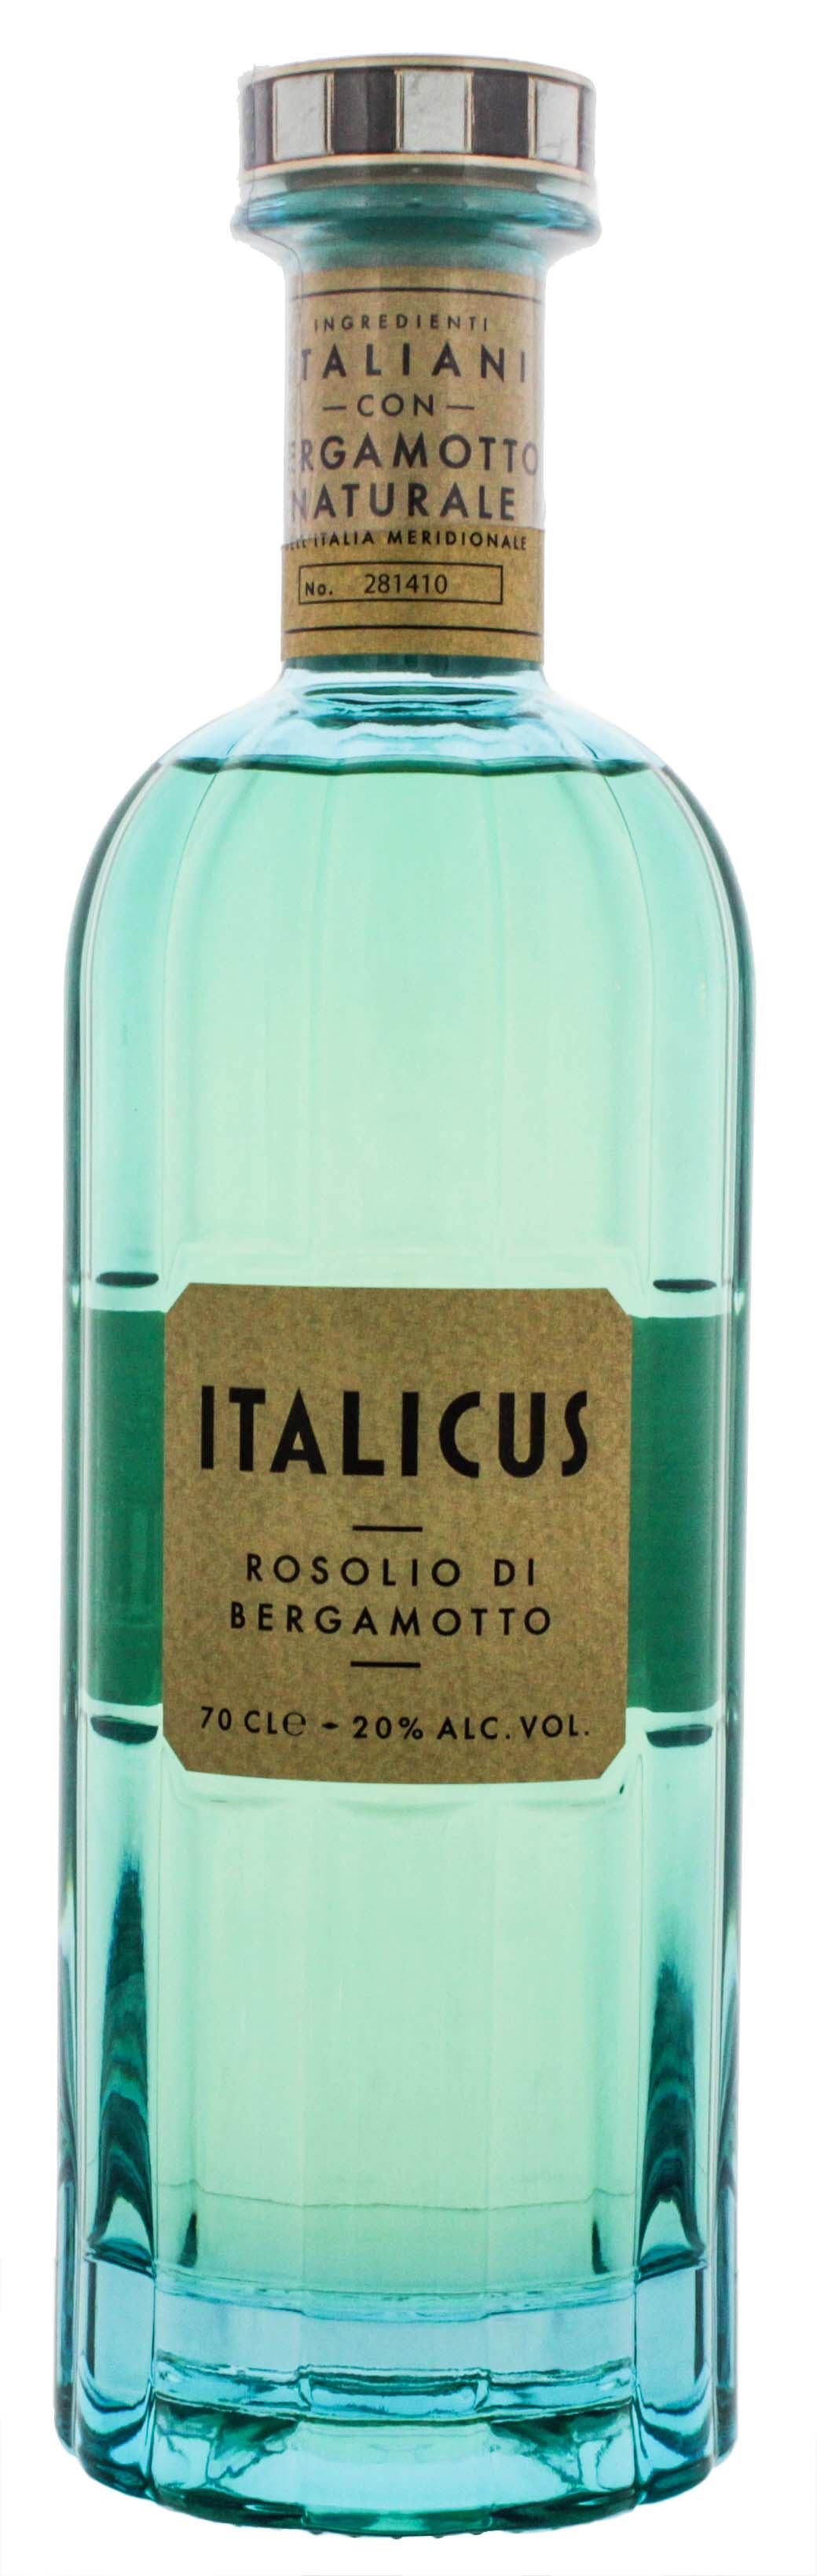 Italicus Rosolio di Bergamotto Liqueur kaufen 0,7L Drinkology Online im jetzt Shop